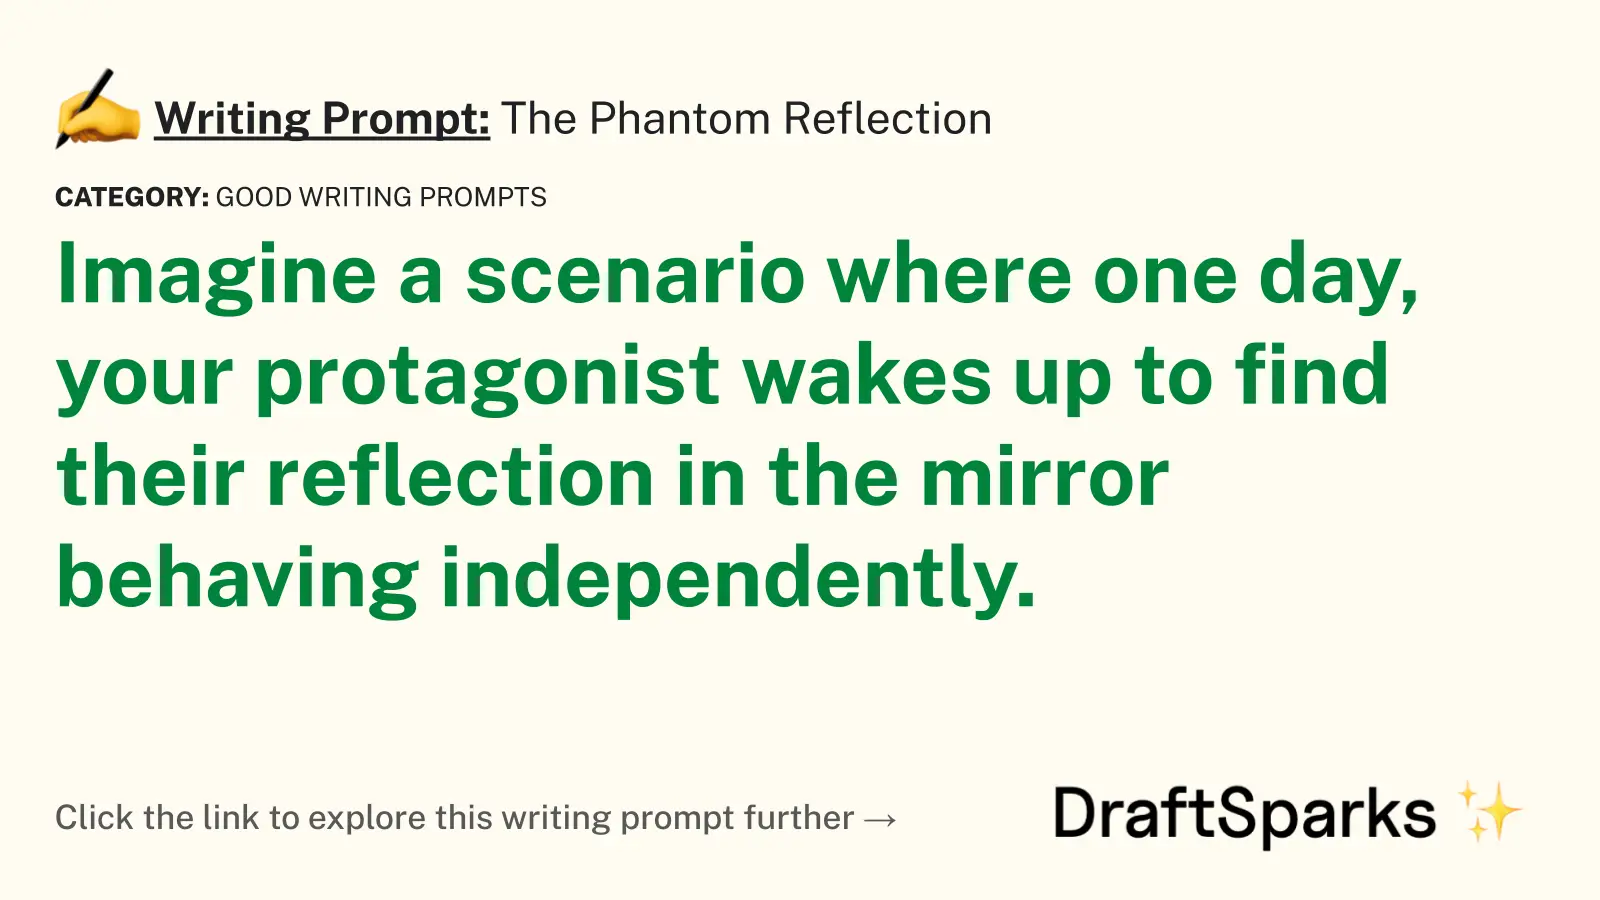 The Phantom Reflection